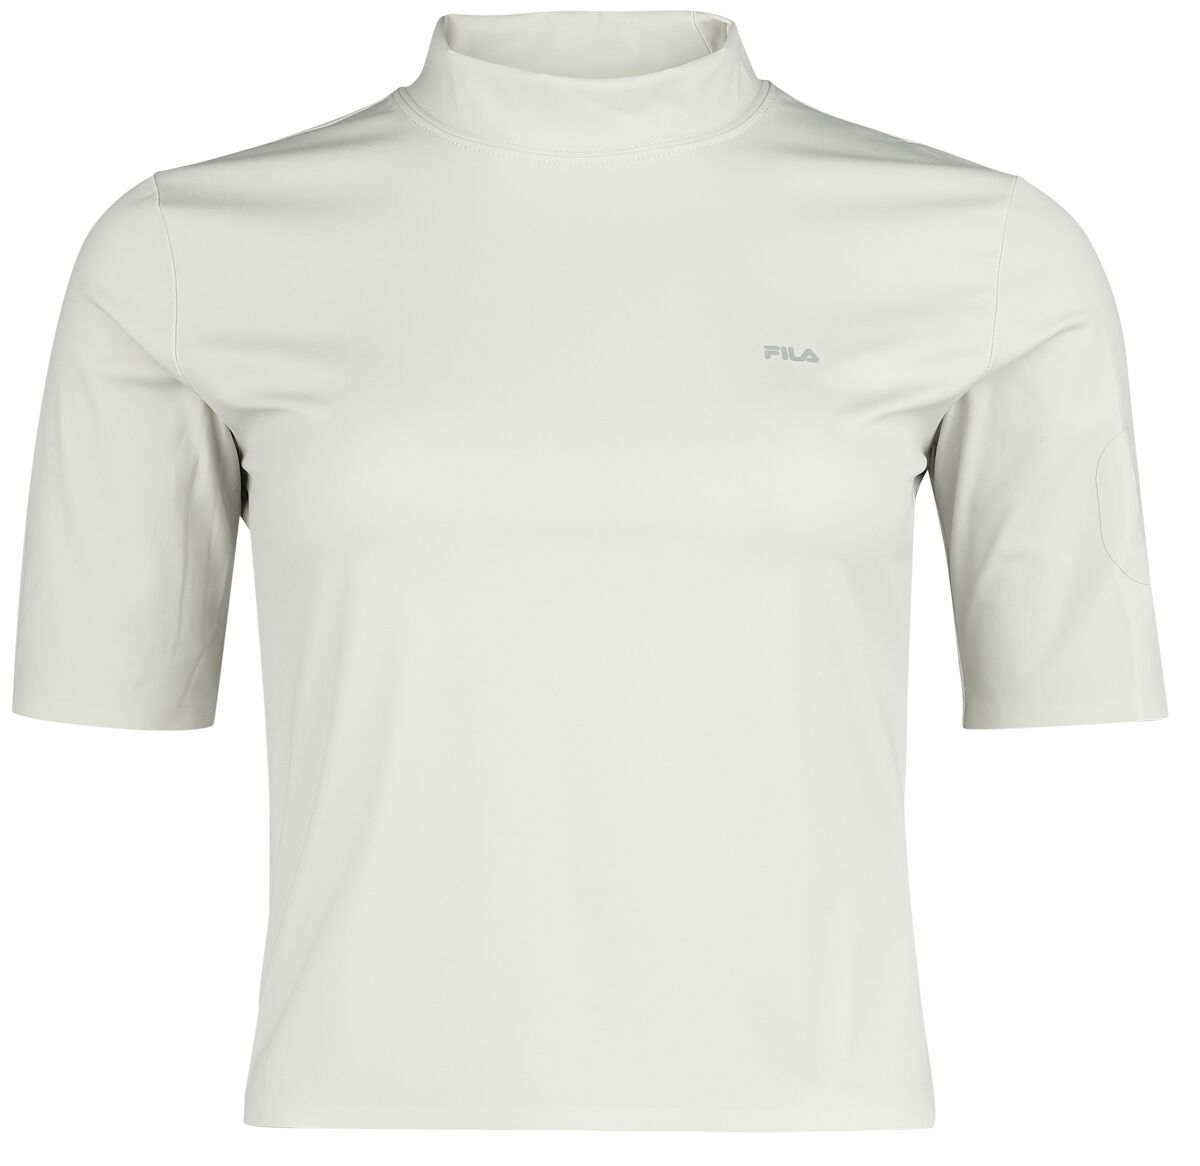 Image of T-Shirt di Fila - S7 CROPPED TIGHT T-SHIRT - M - Donna - panna